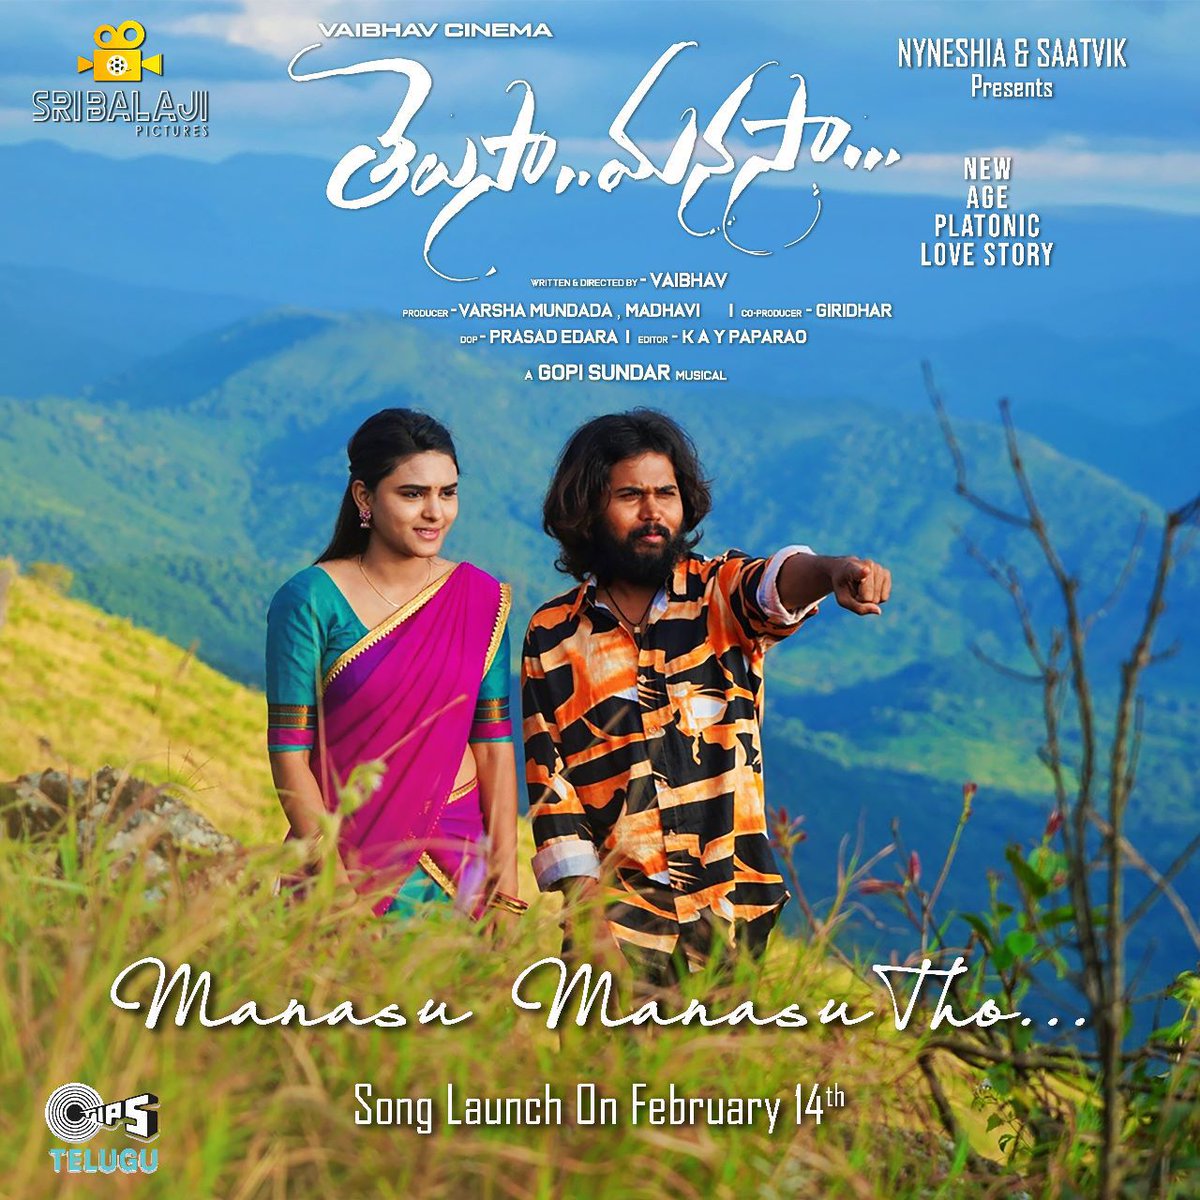 A lilting love melody #manasumanasutho is here to fill your hearts with LOVE♥️
#telusamanasa 1st single out on 14feb!!🎧
A @GopiSundarOffl Musical 🎶 @srikrisin #vanamali @ActorAliReza #TelusaManasa #SriBalajiPictures @VaibhavWriter @parvateesam_u @Jashvika2000 @maheshachanta